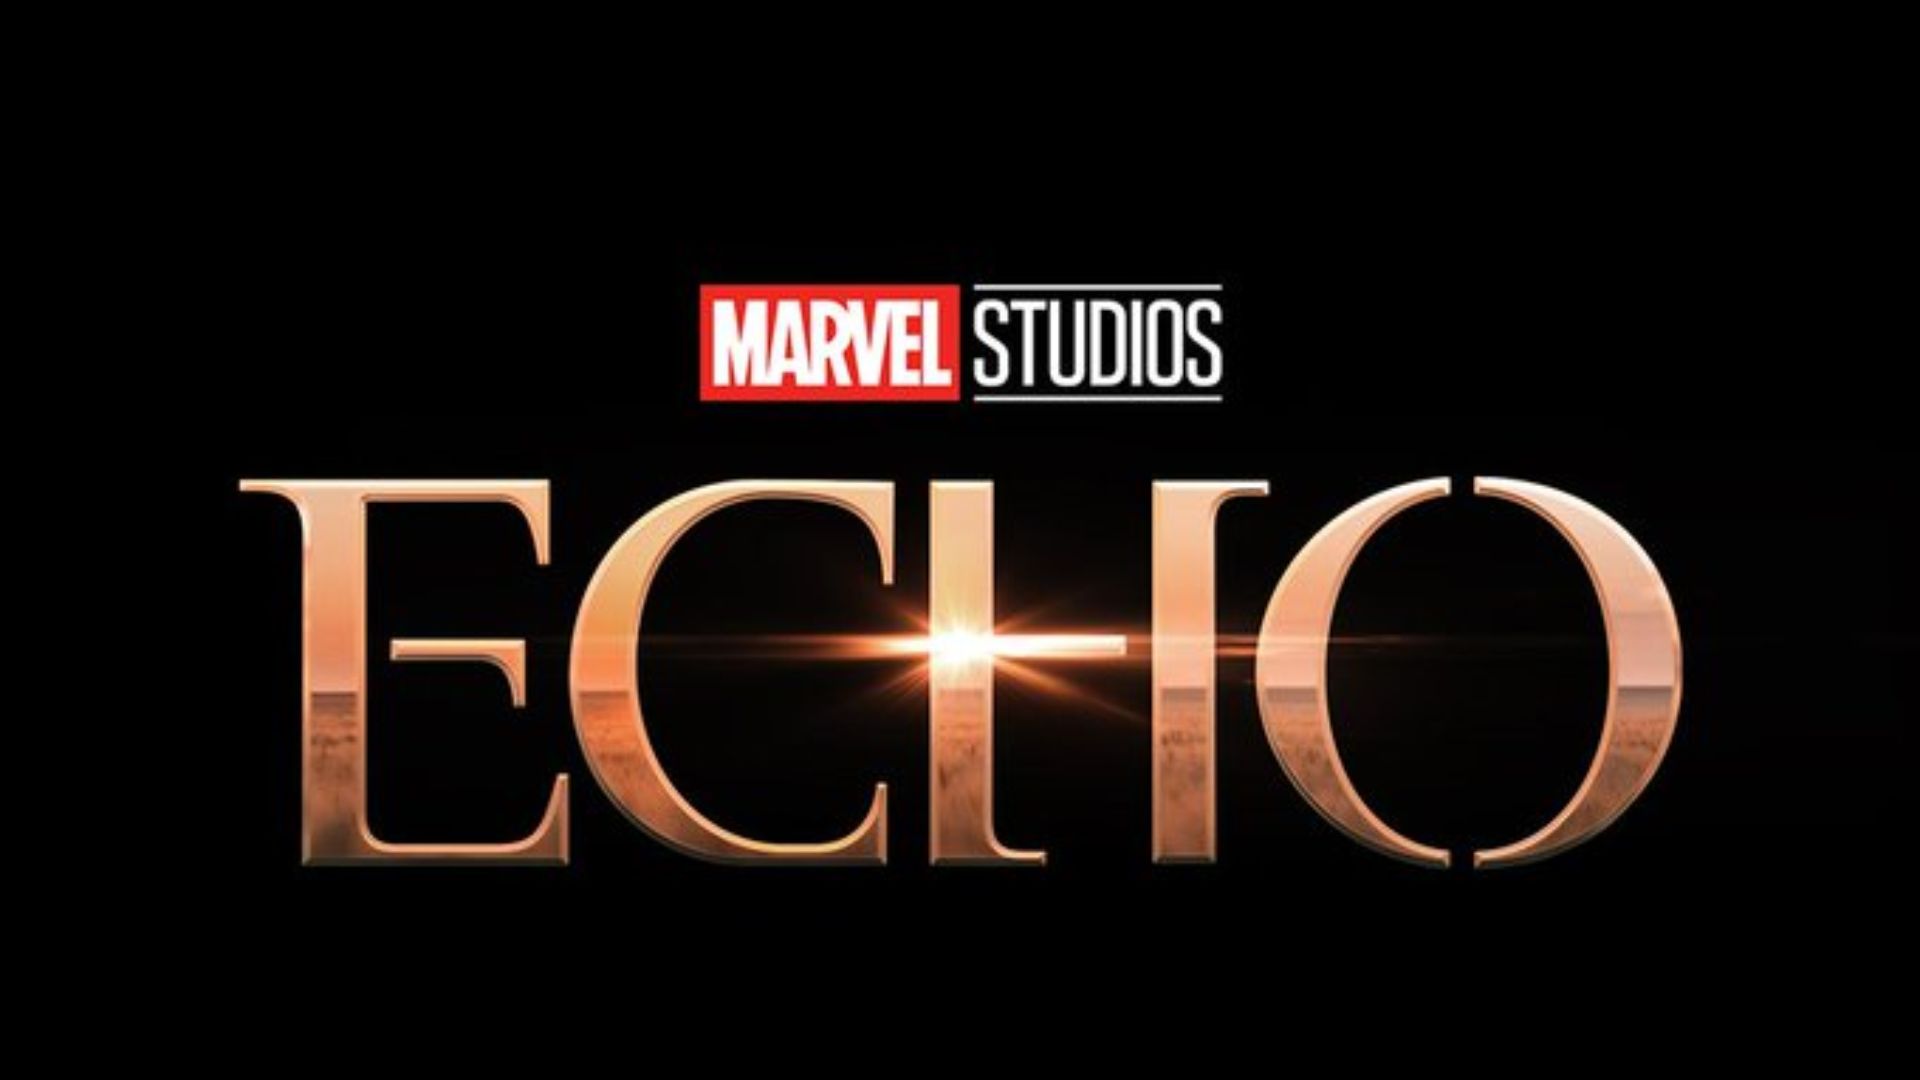 A logo for new Marvel TV show Echo